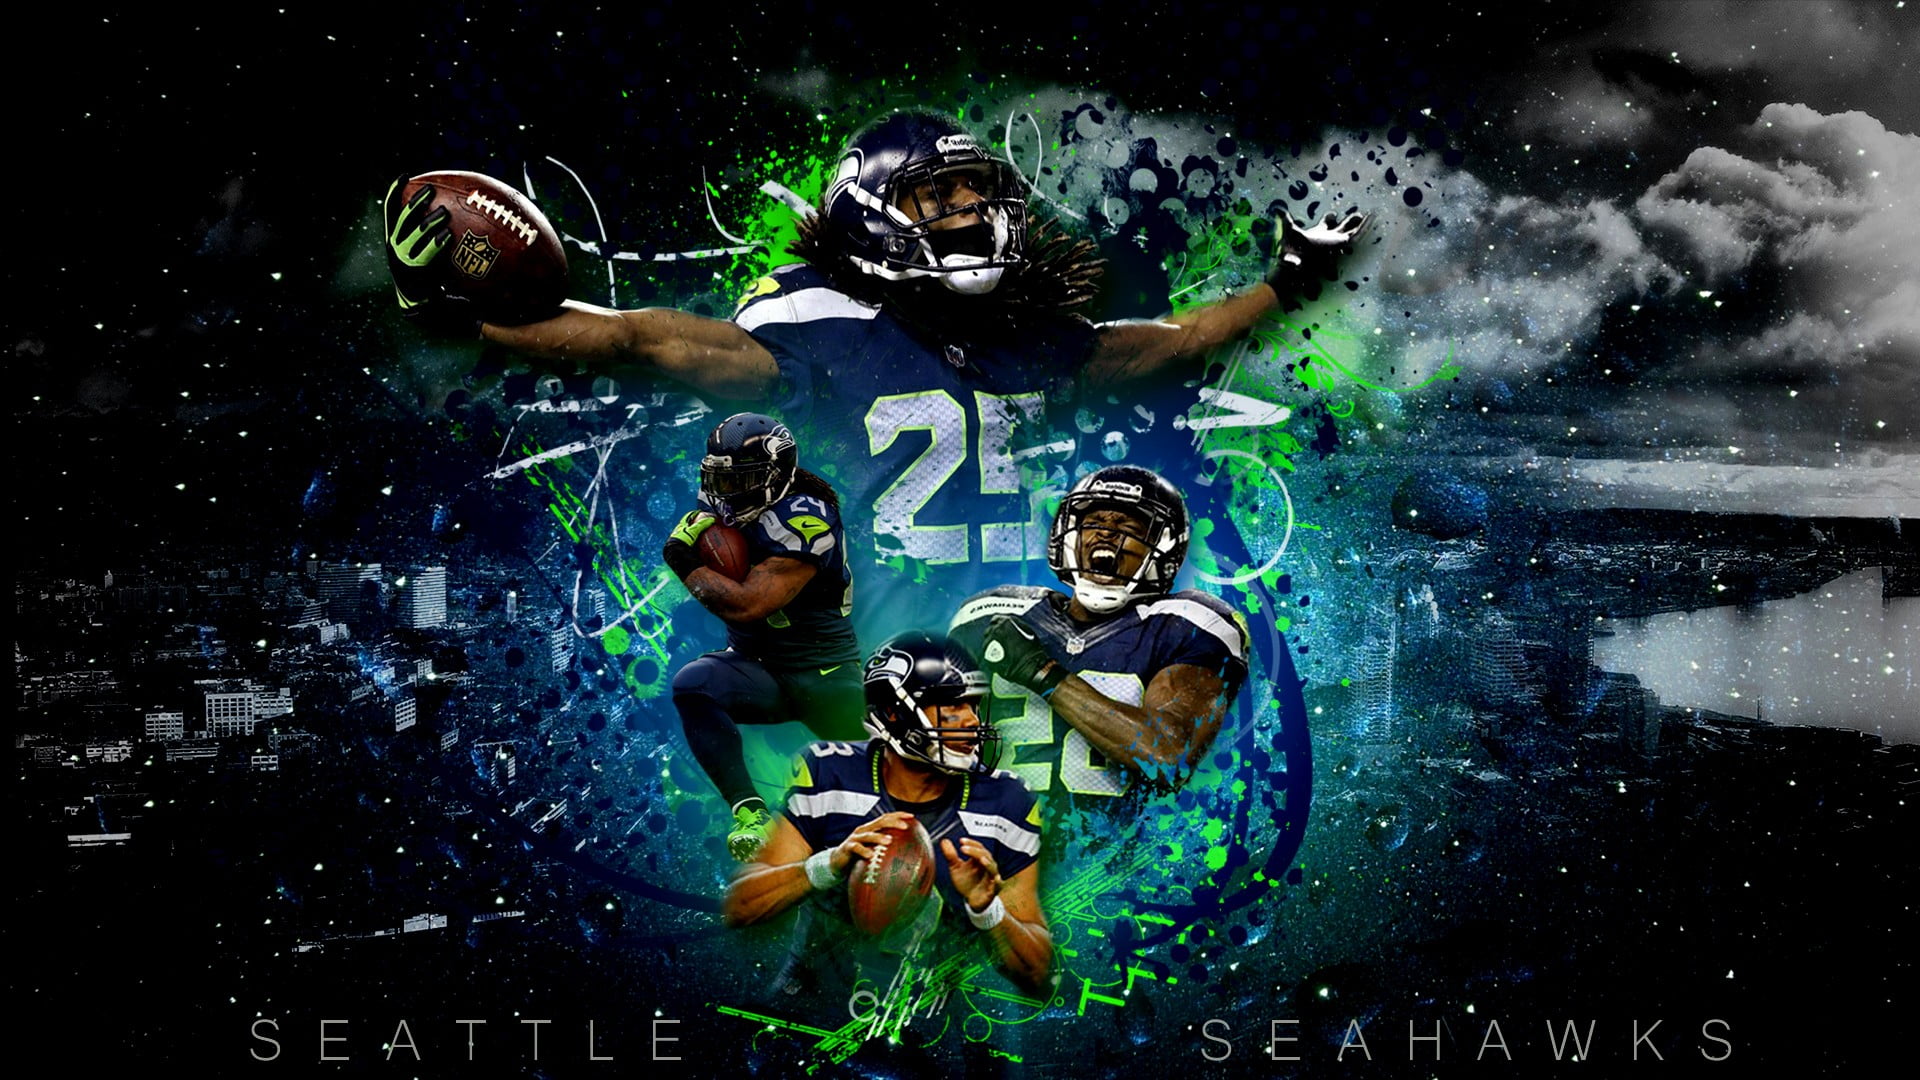 Seattle Seahawks poster, sports, NFL, American football, green